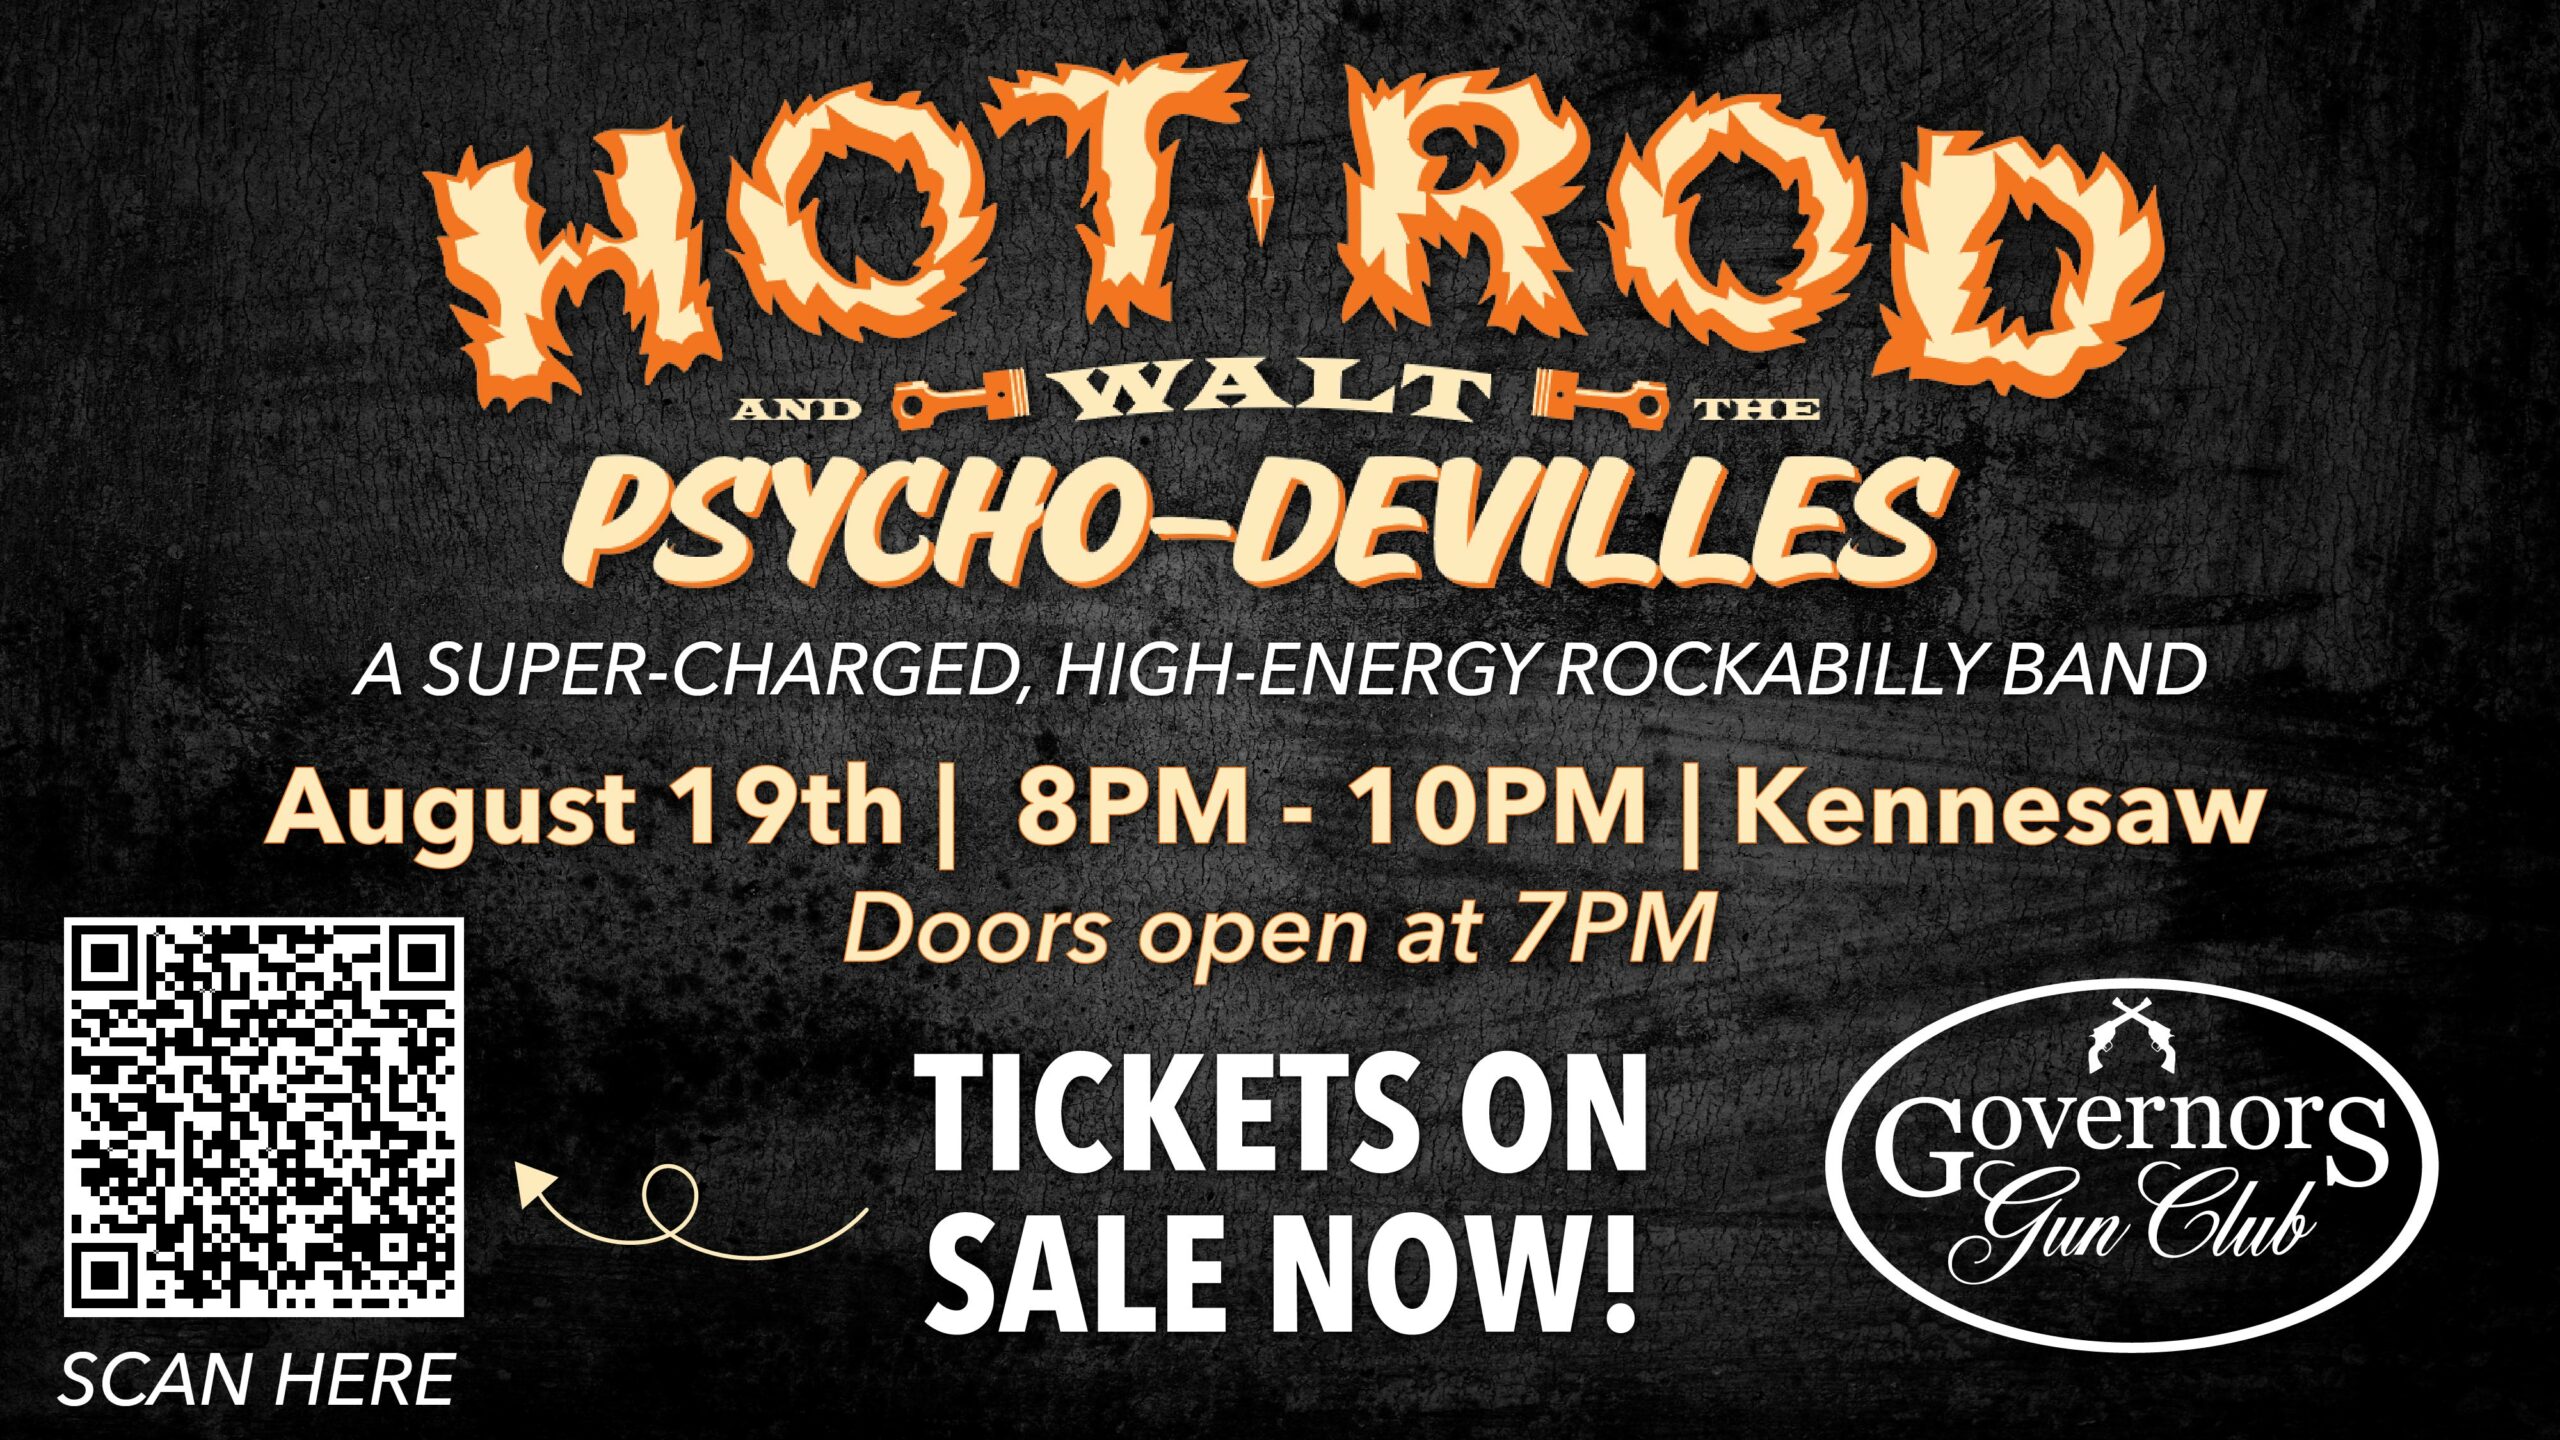 Hot Rod Walt and the Psycho-Devilles